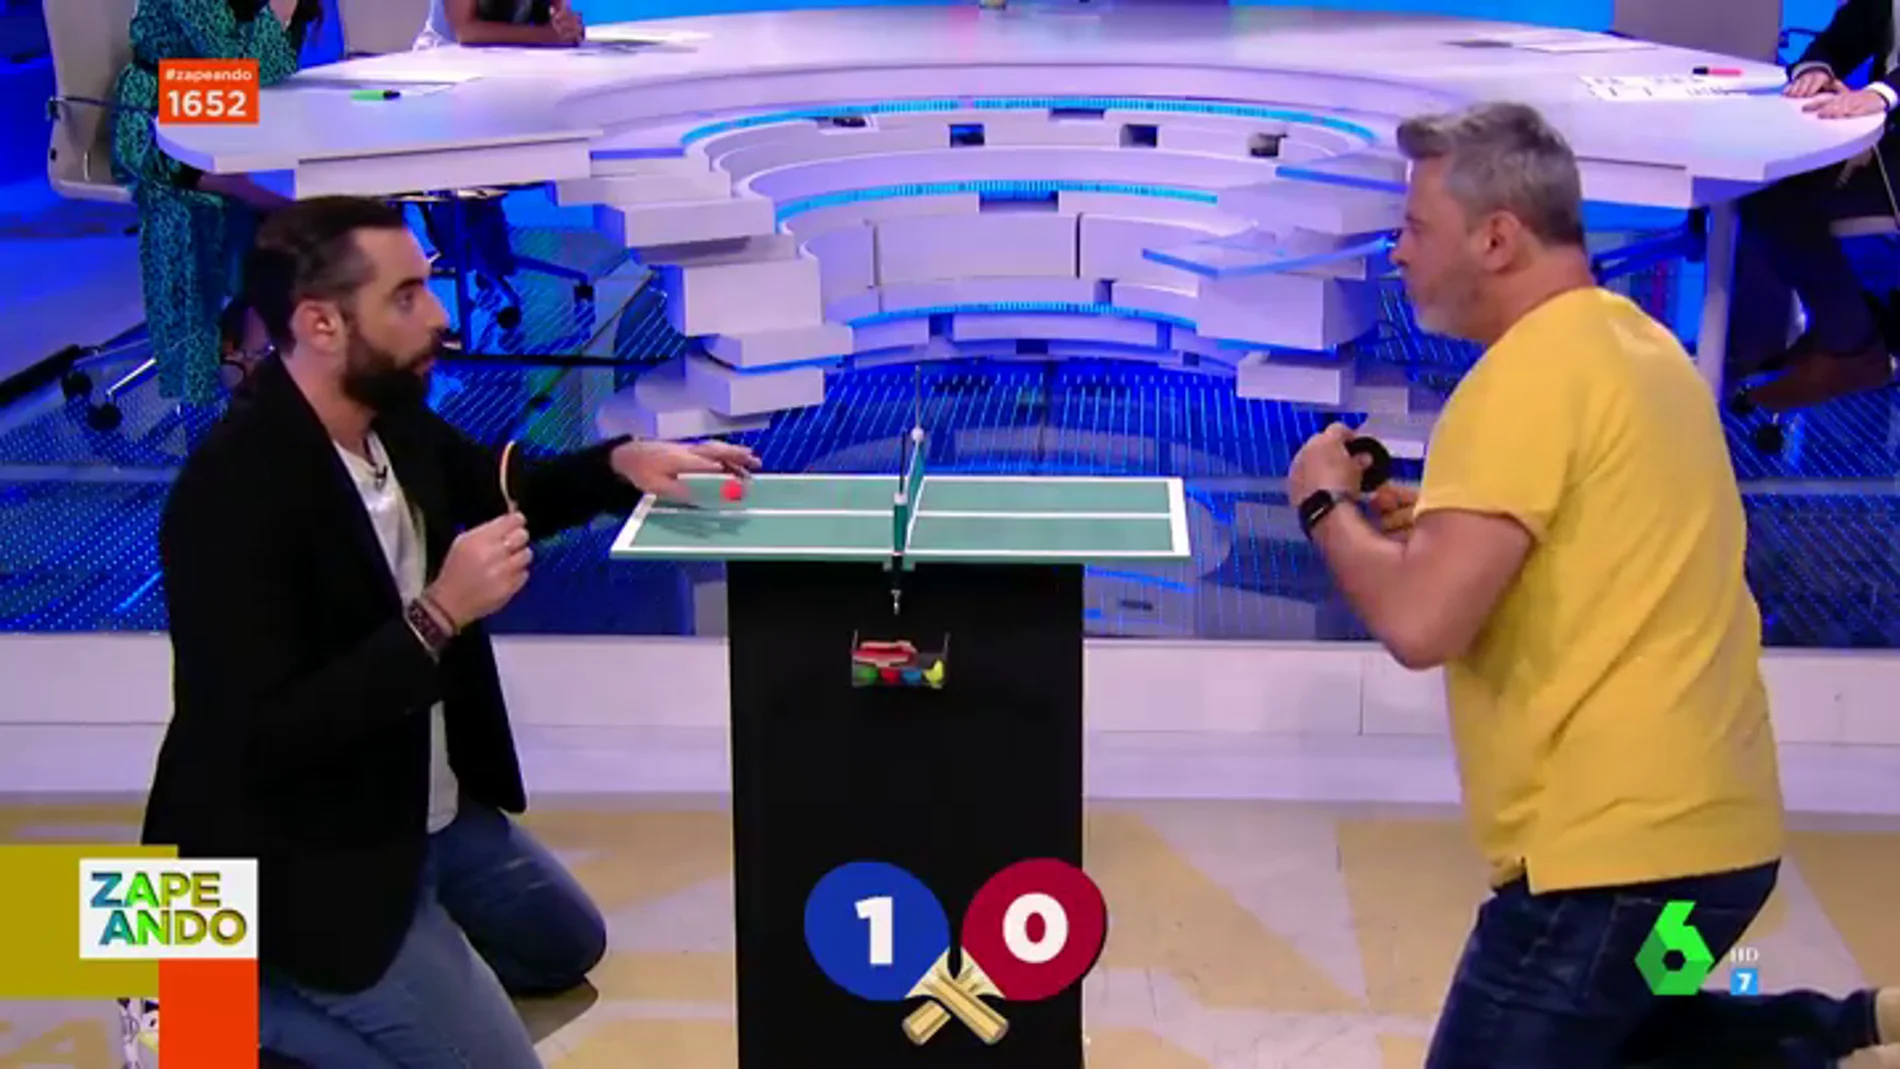 El 'tenso' duelo de 'mini pingpong' entre Dani Mateo y Miki Nadal: "Me he puesto nervioso"